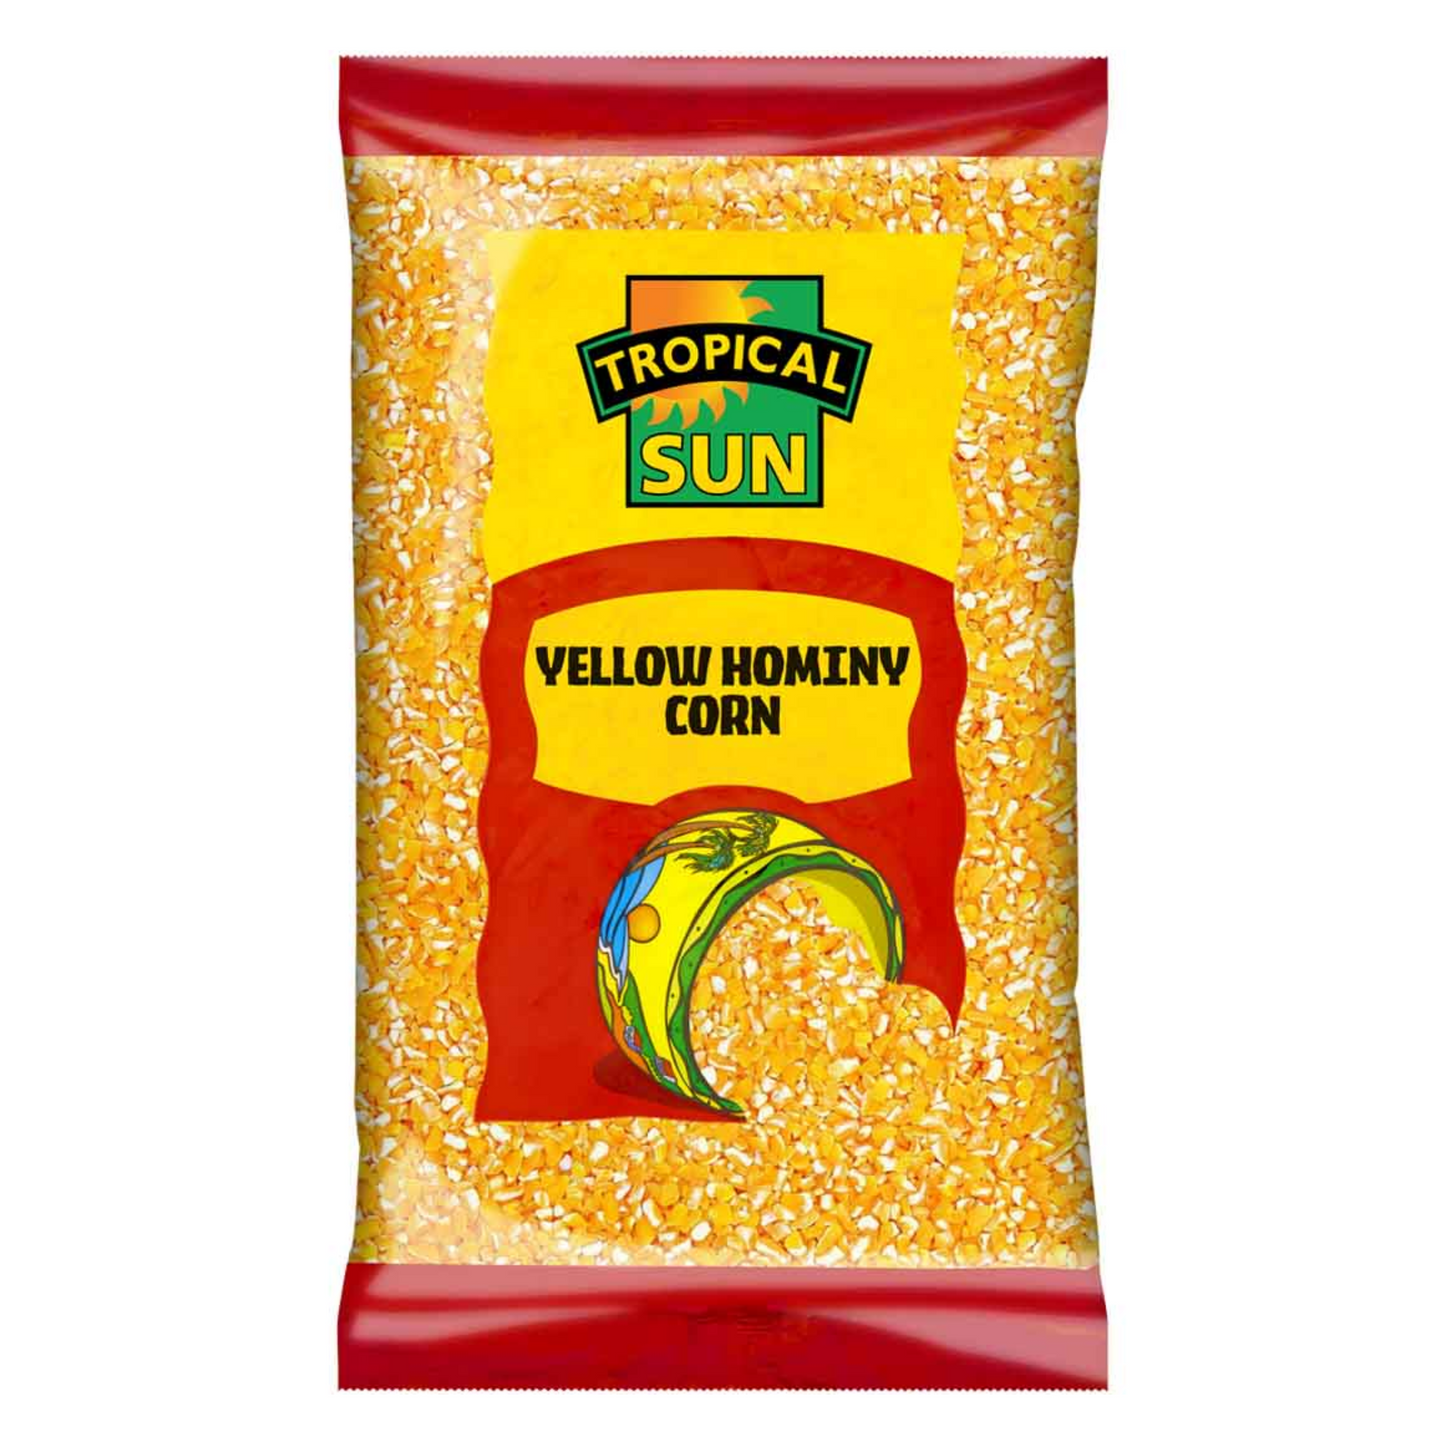 Tropical Sun Yellow Hominy Corn